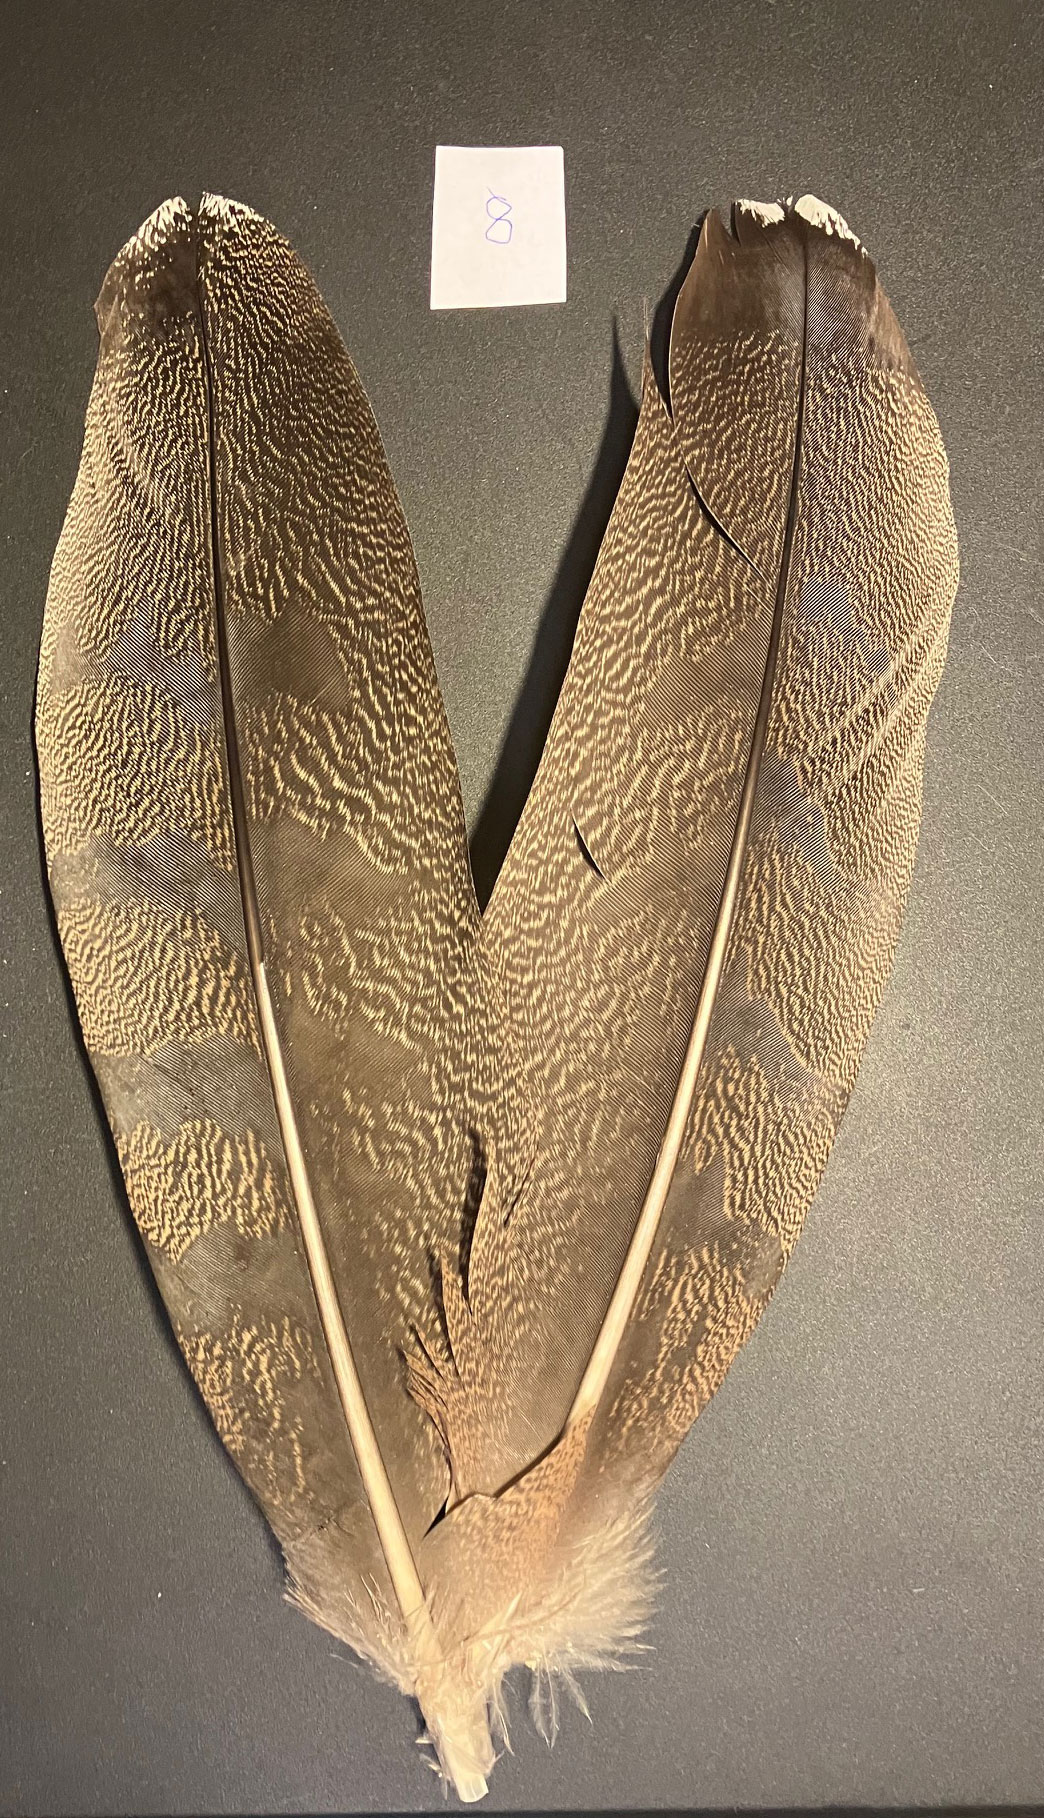 Kori bustard shoulder feather 8